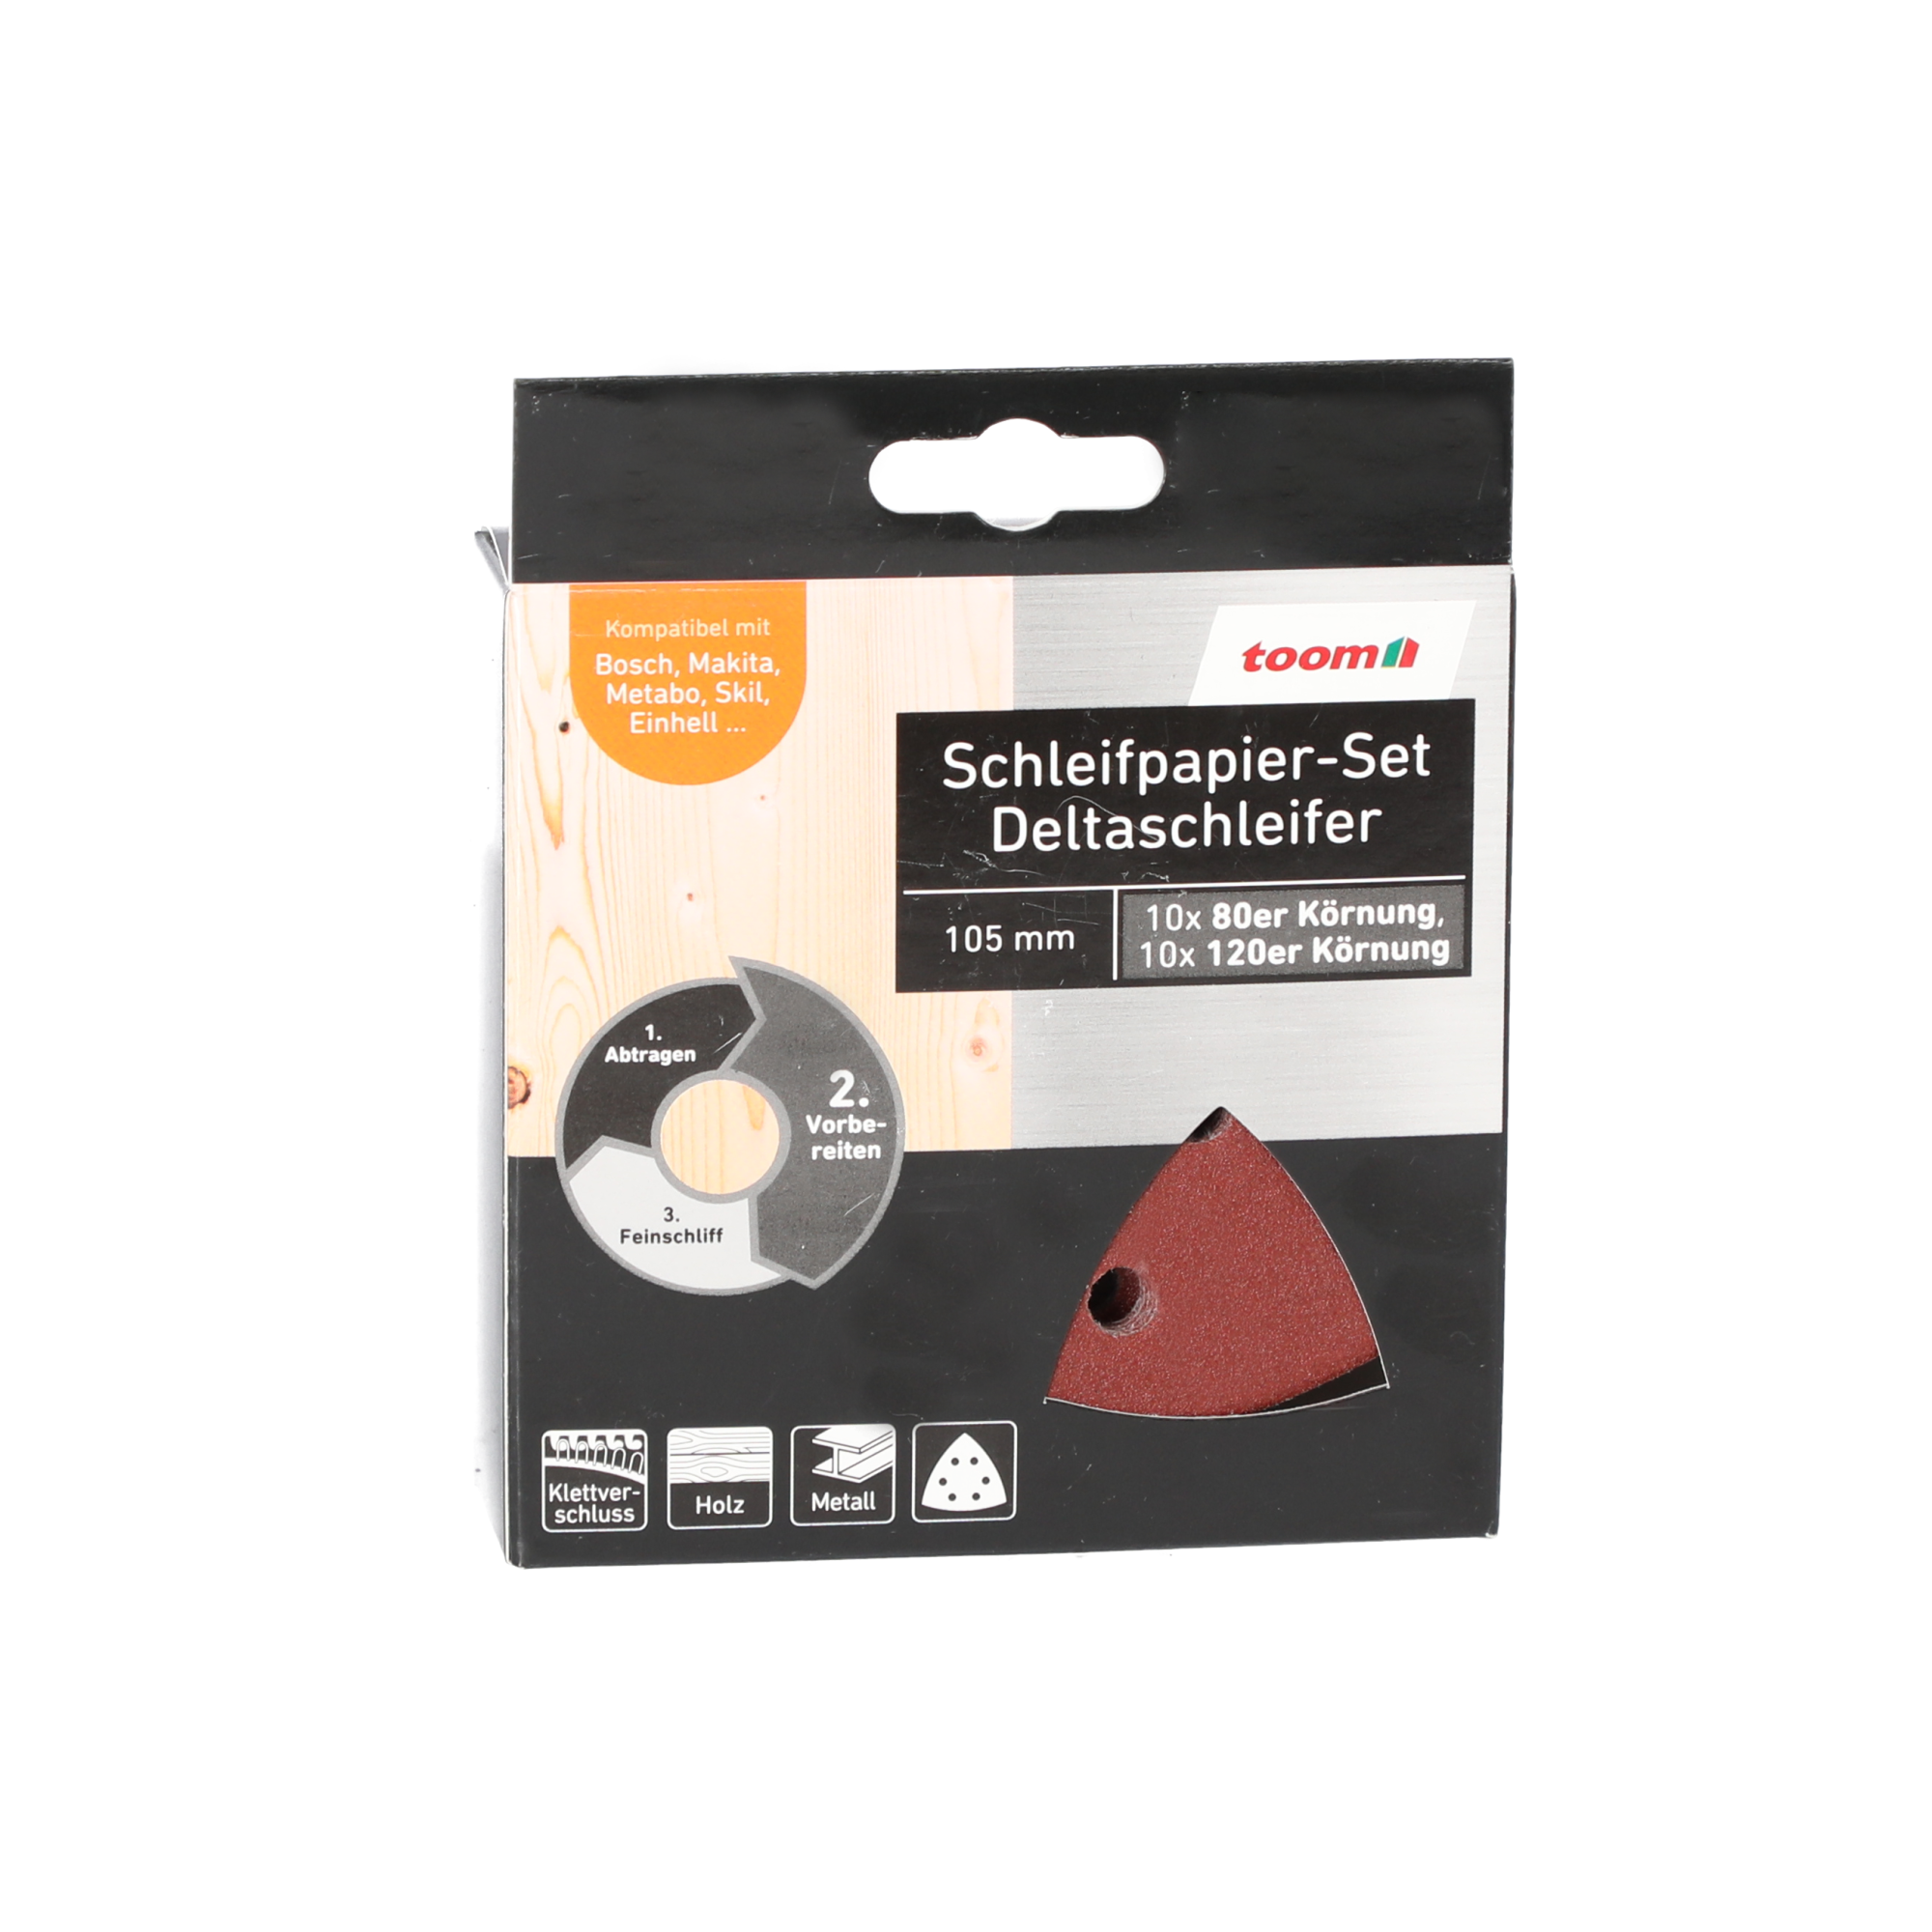 Schleifpapier-Set Ø 105 mm, K 80/120, 20 Stück + product picture